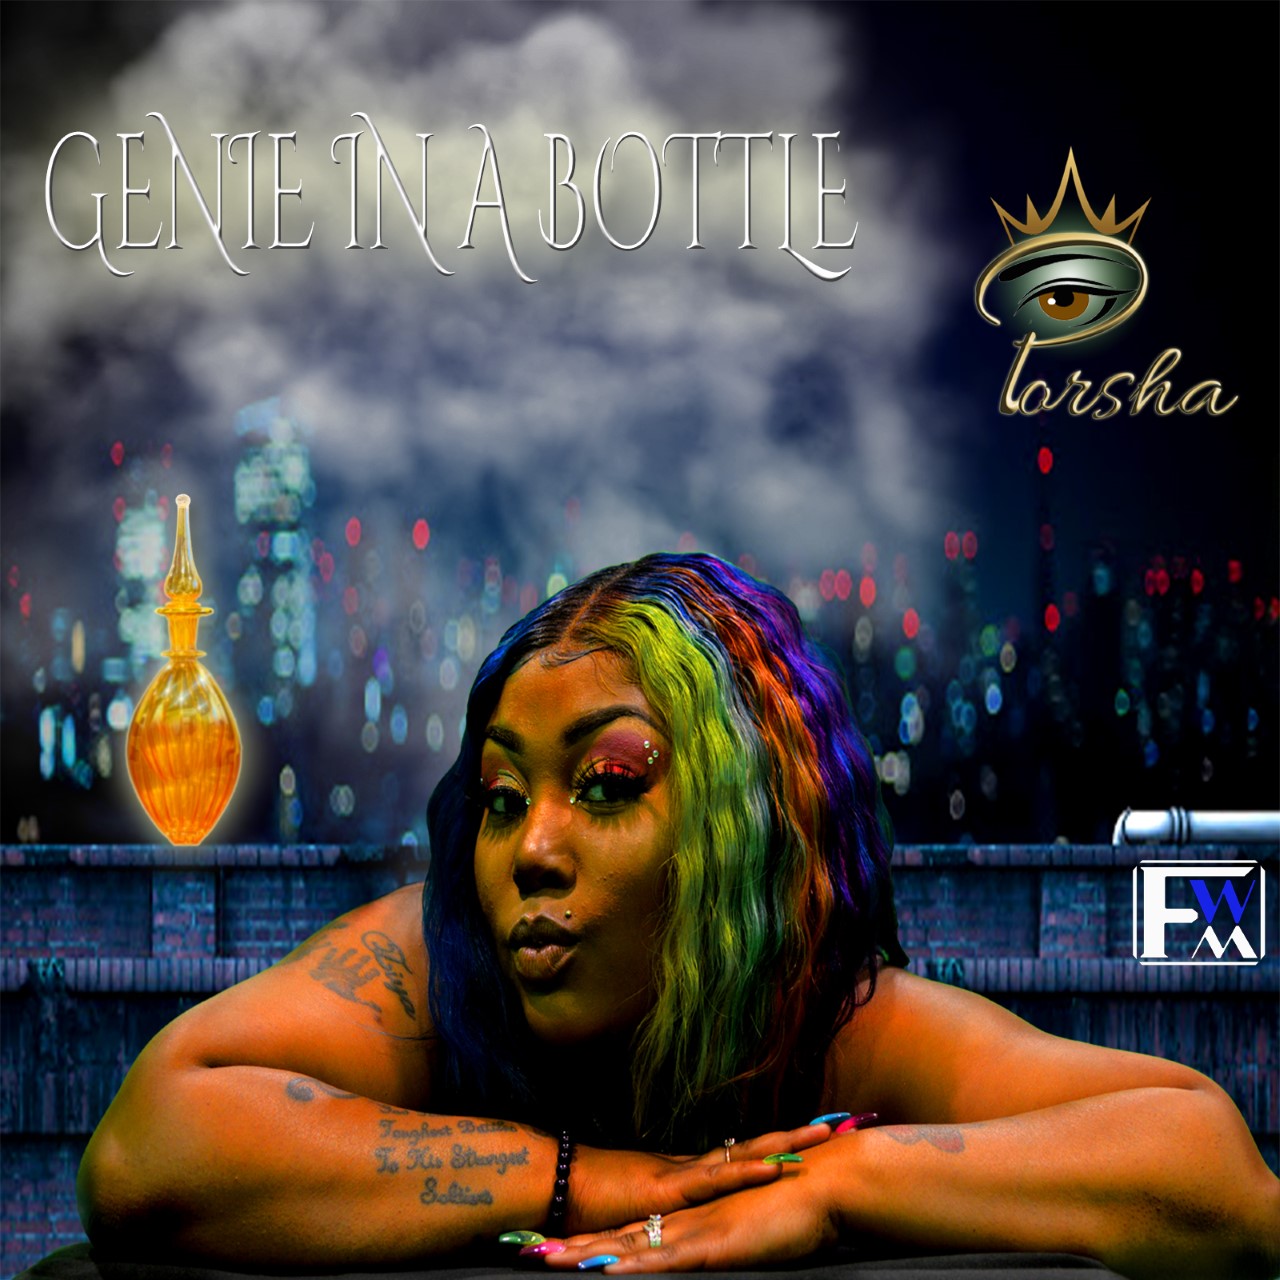 Art for Genie In A Bottle by Porsha